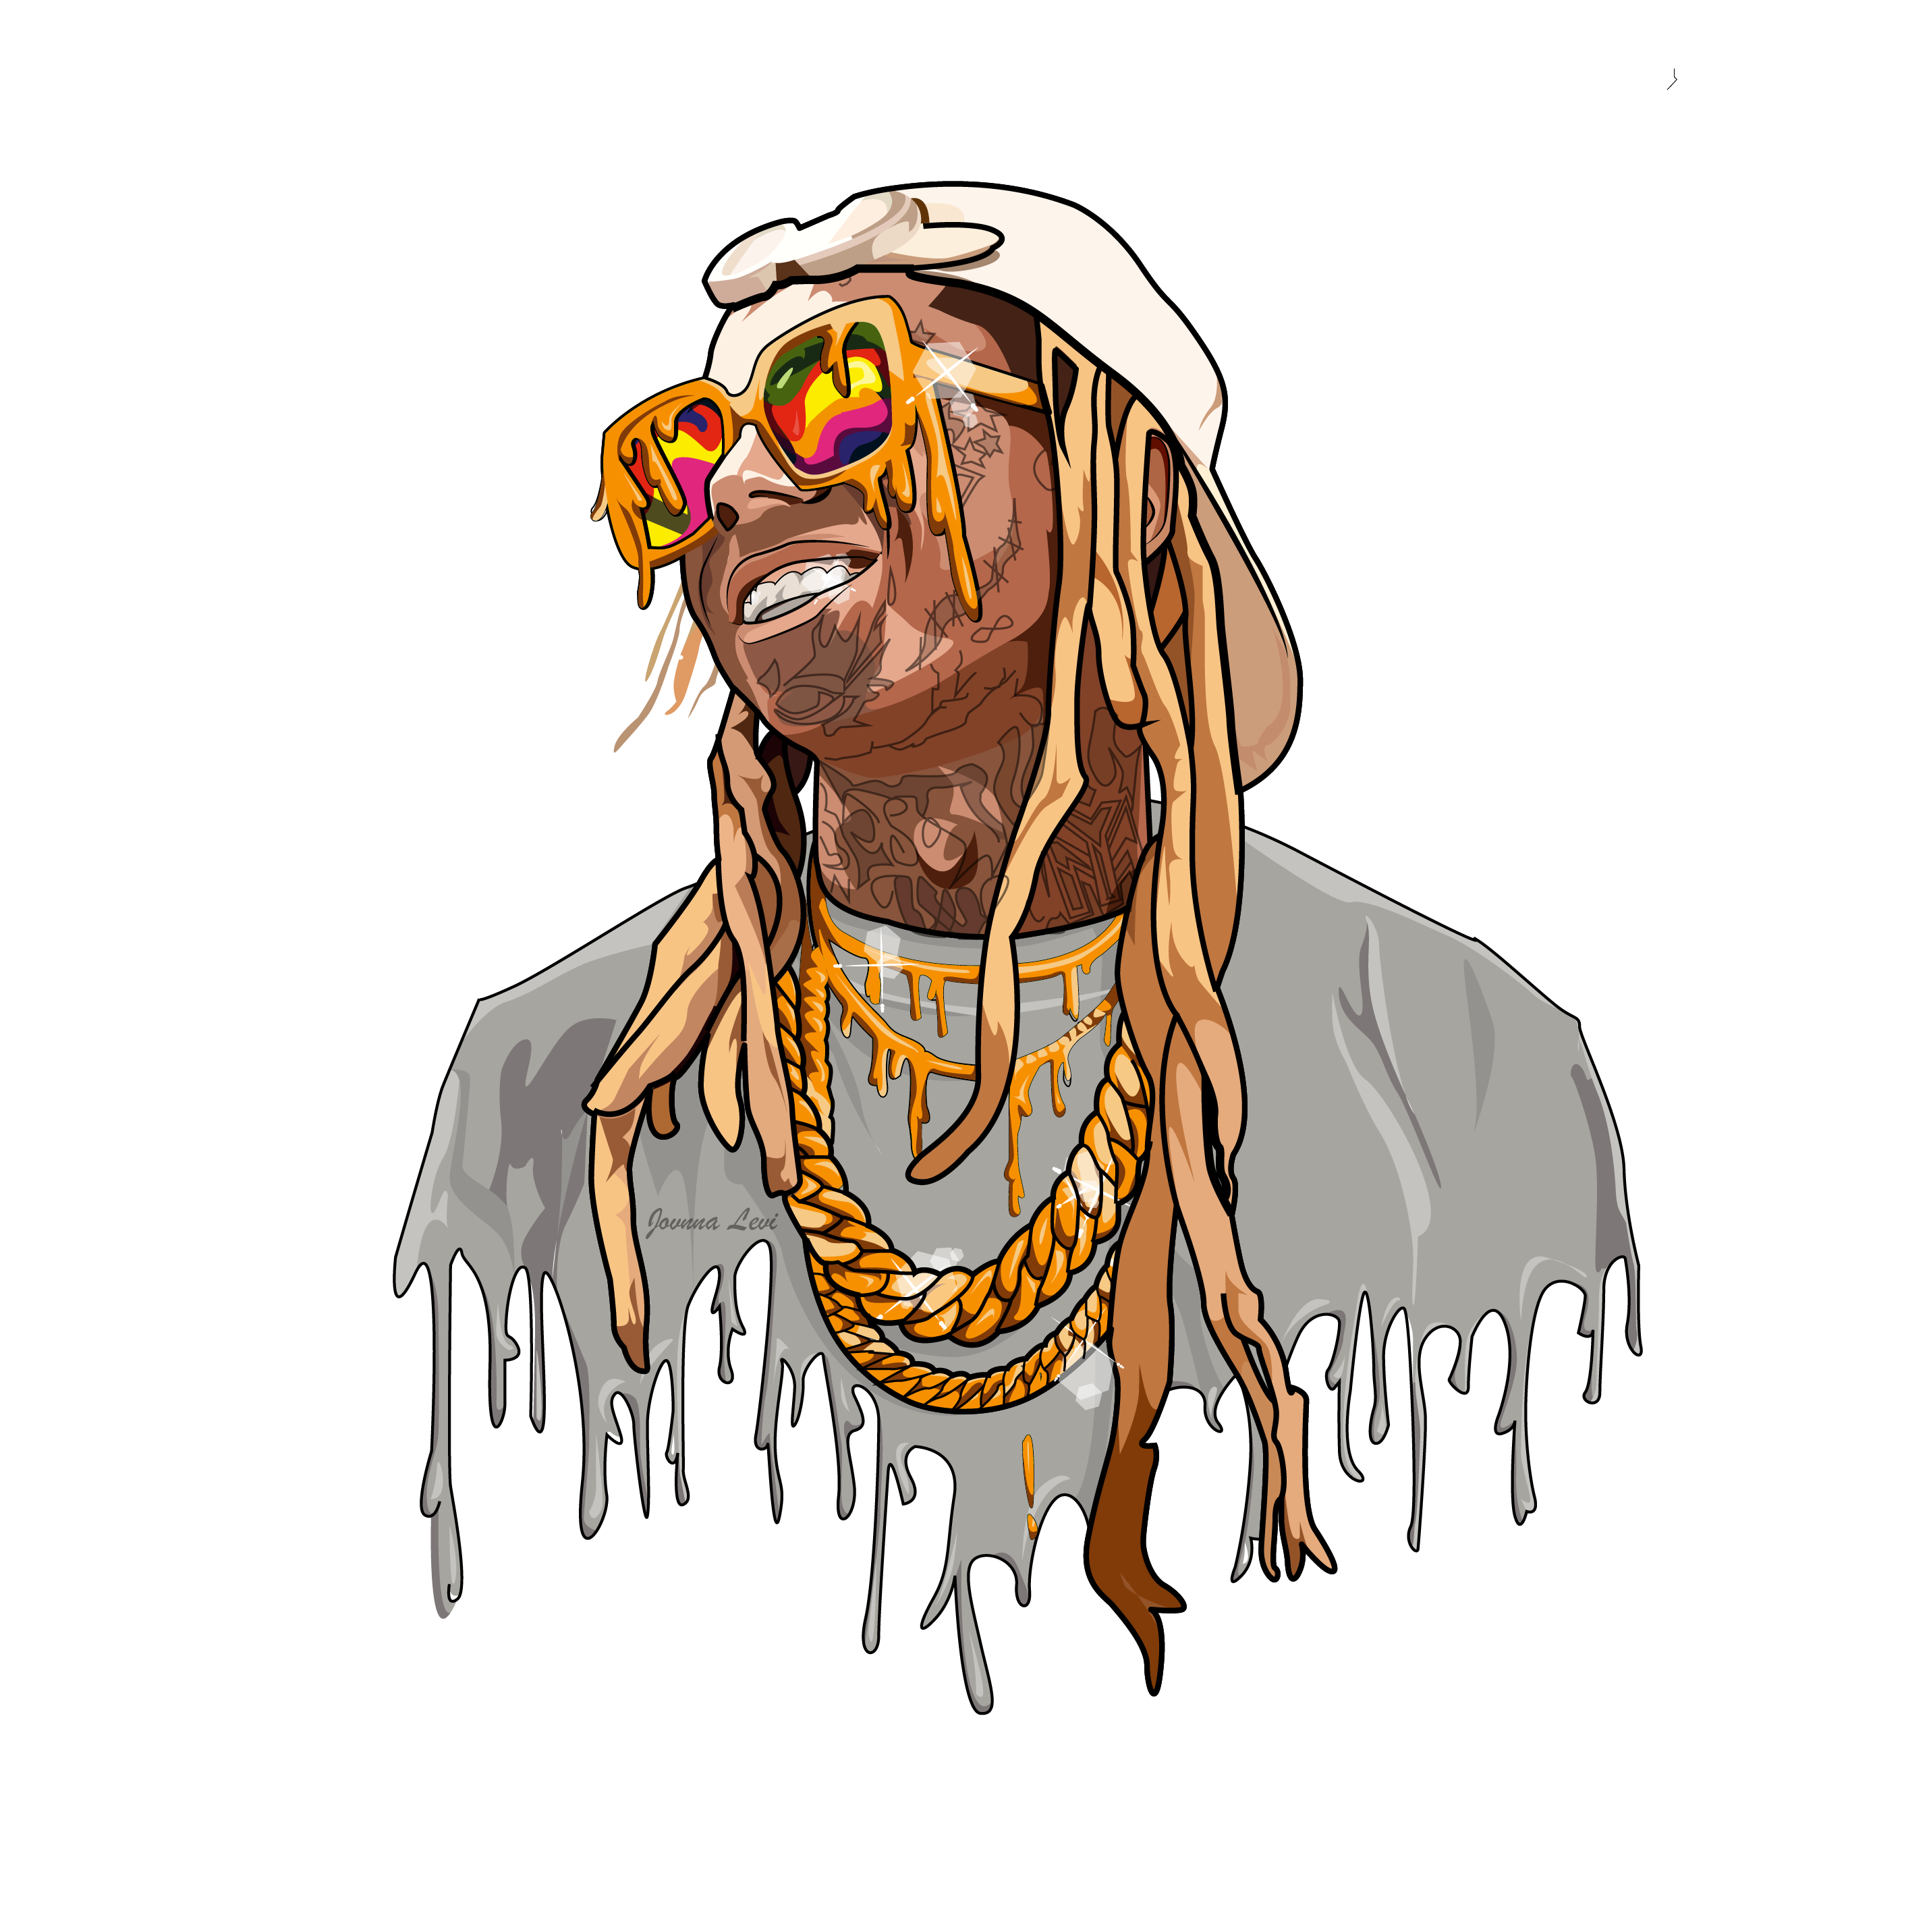 Lil Wayne Forumlilwaynehq.com